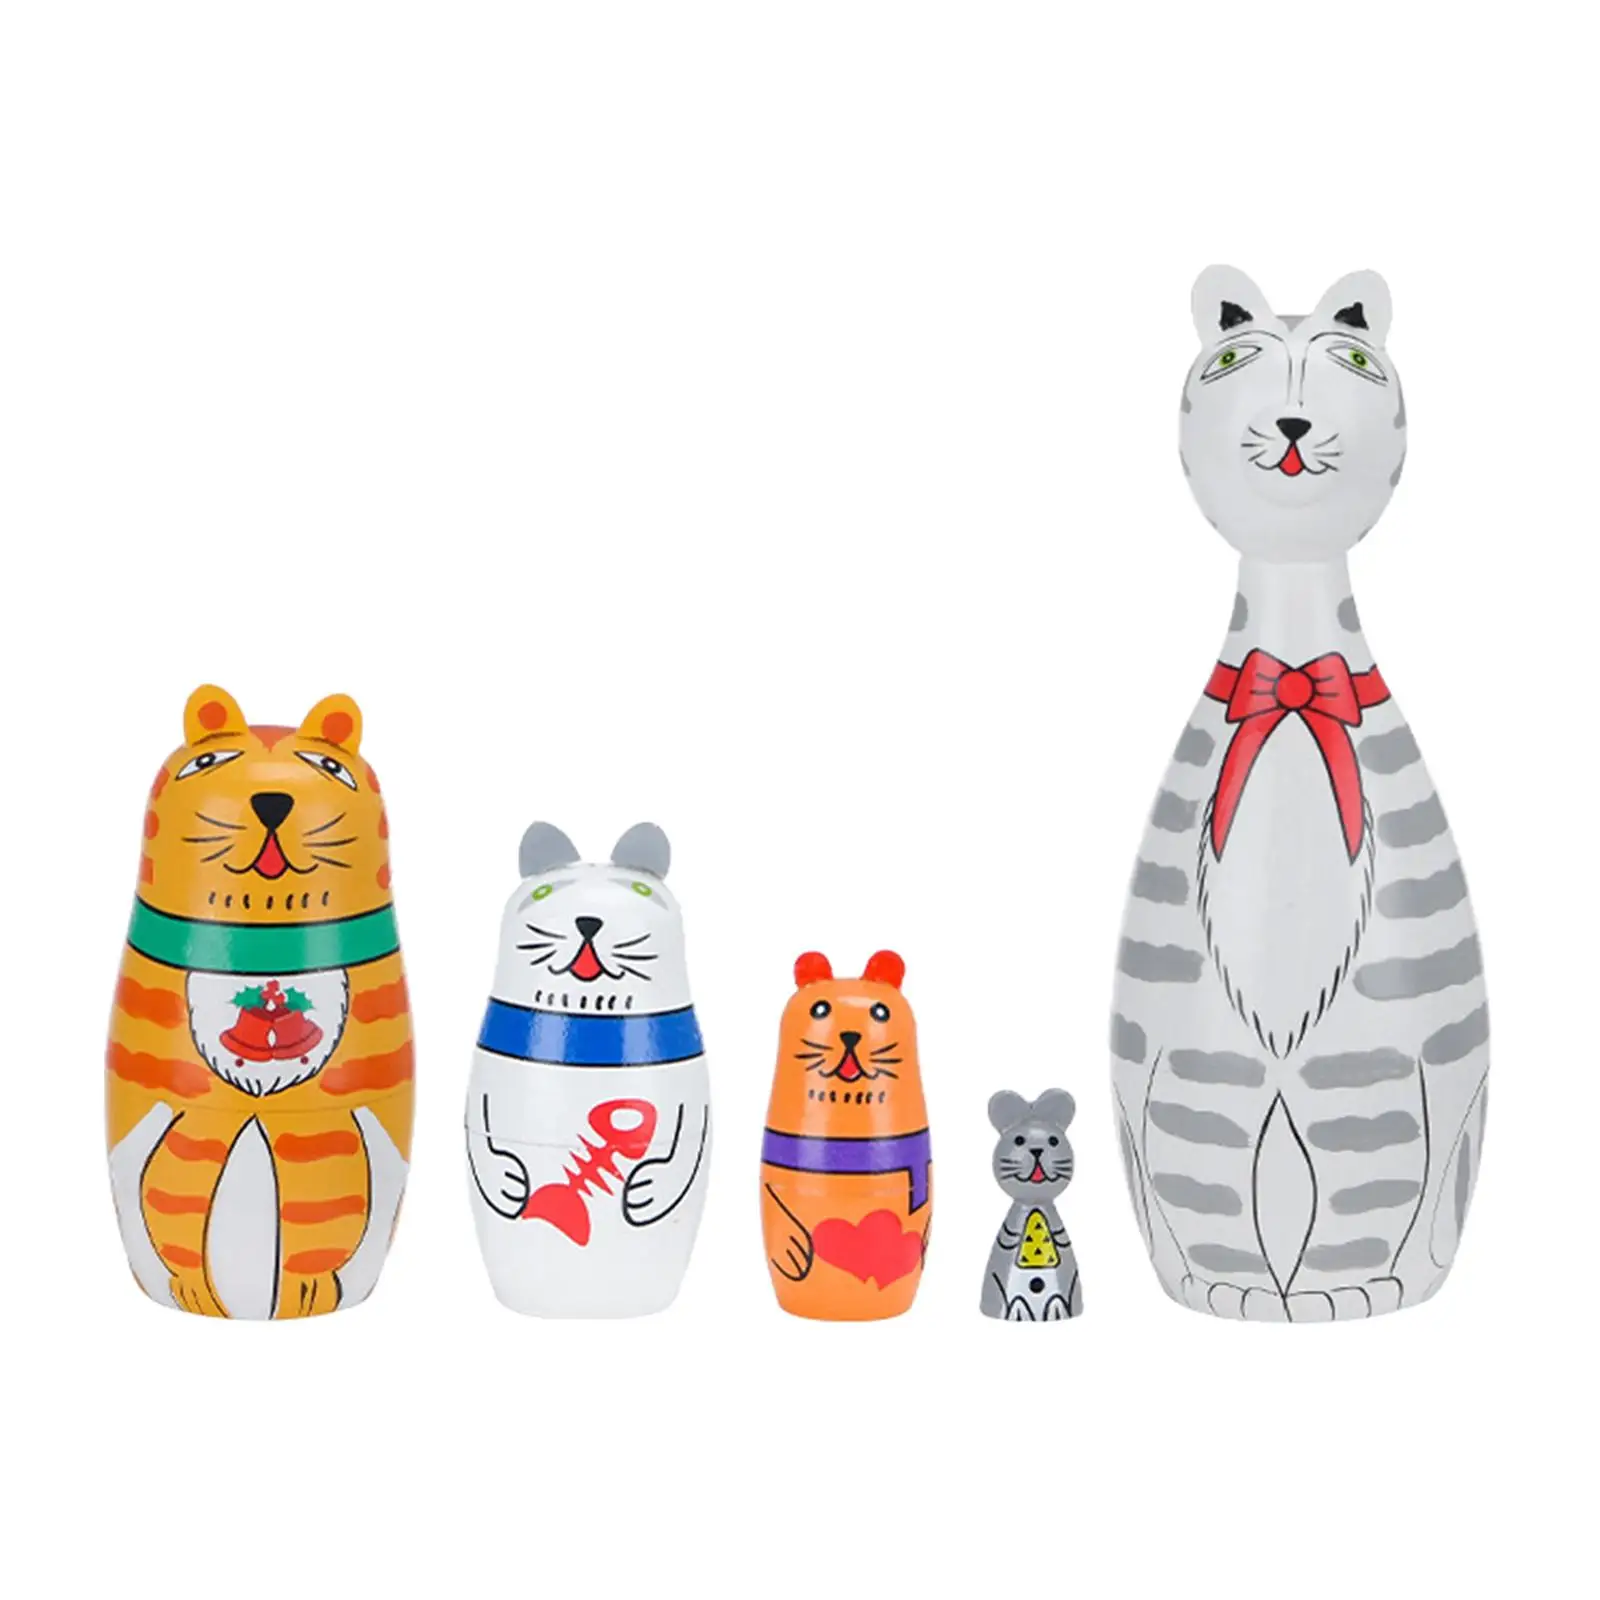 5Pcs Cute Russian Nesting Dolls Ornaments Desk Handmade Animals Matryoshka for Collectible Halloween Kids Wishing Gift Home